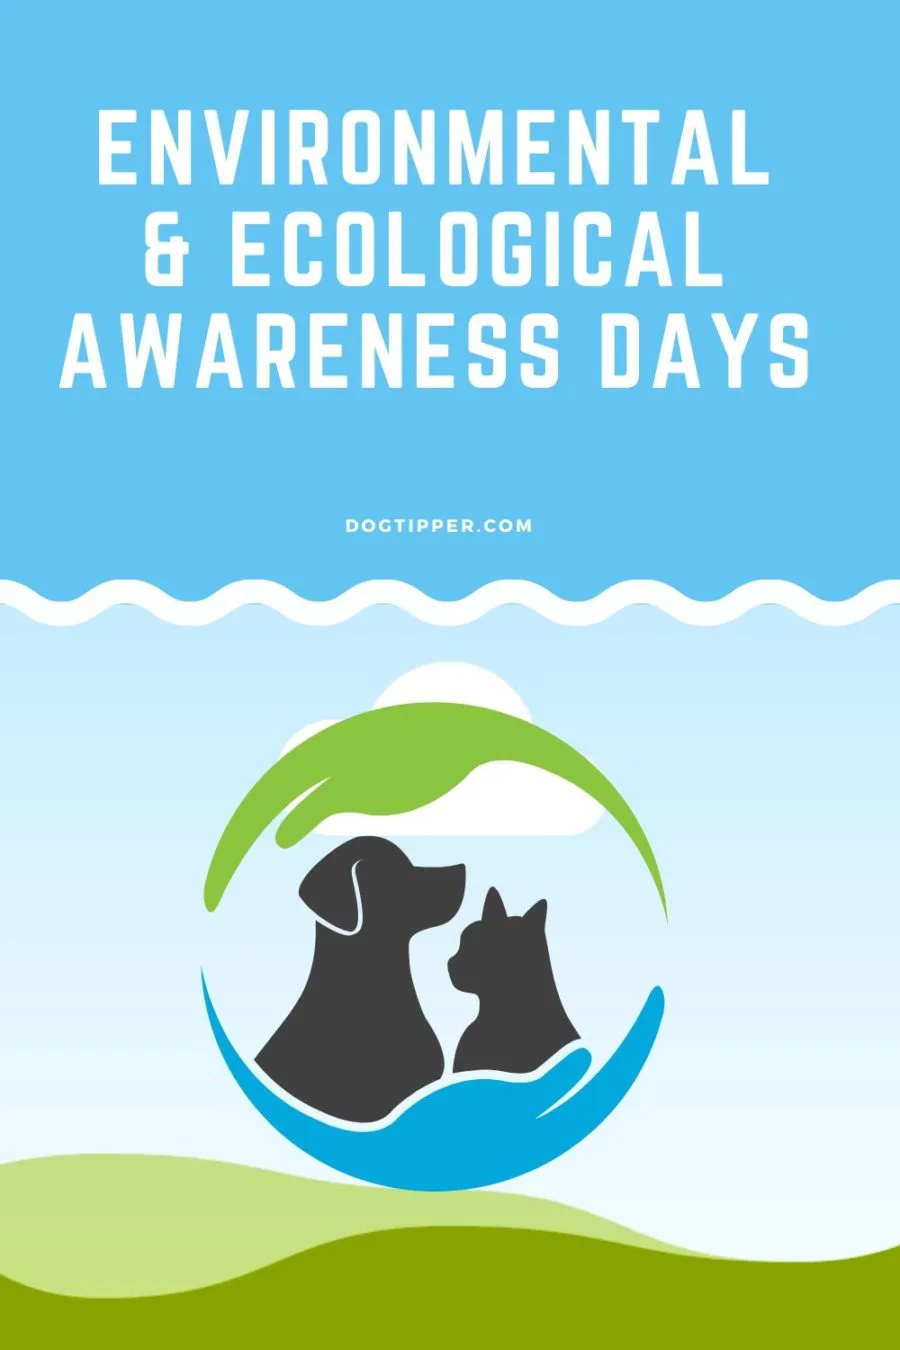 Environmental Awareness Days